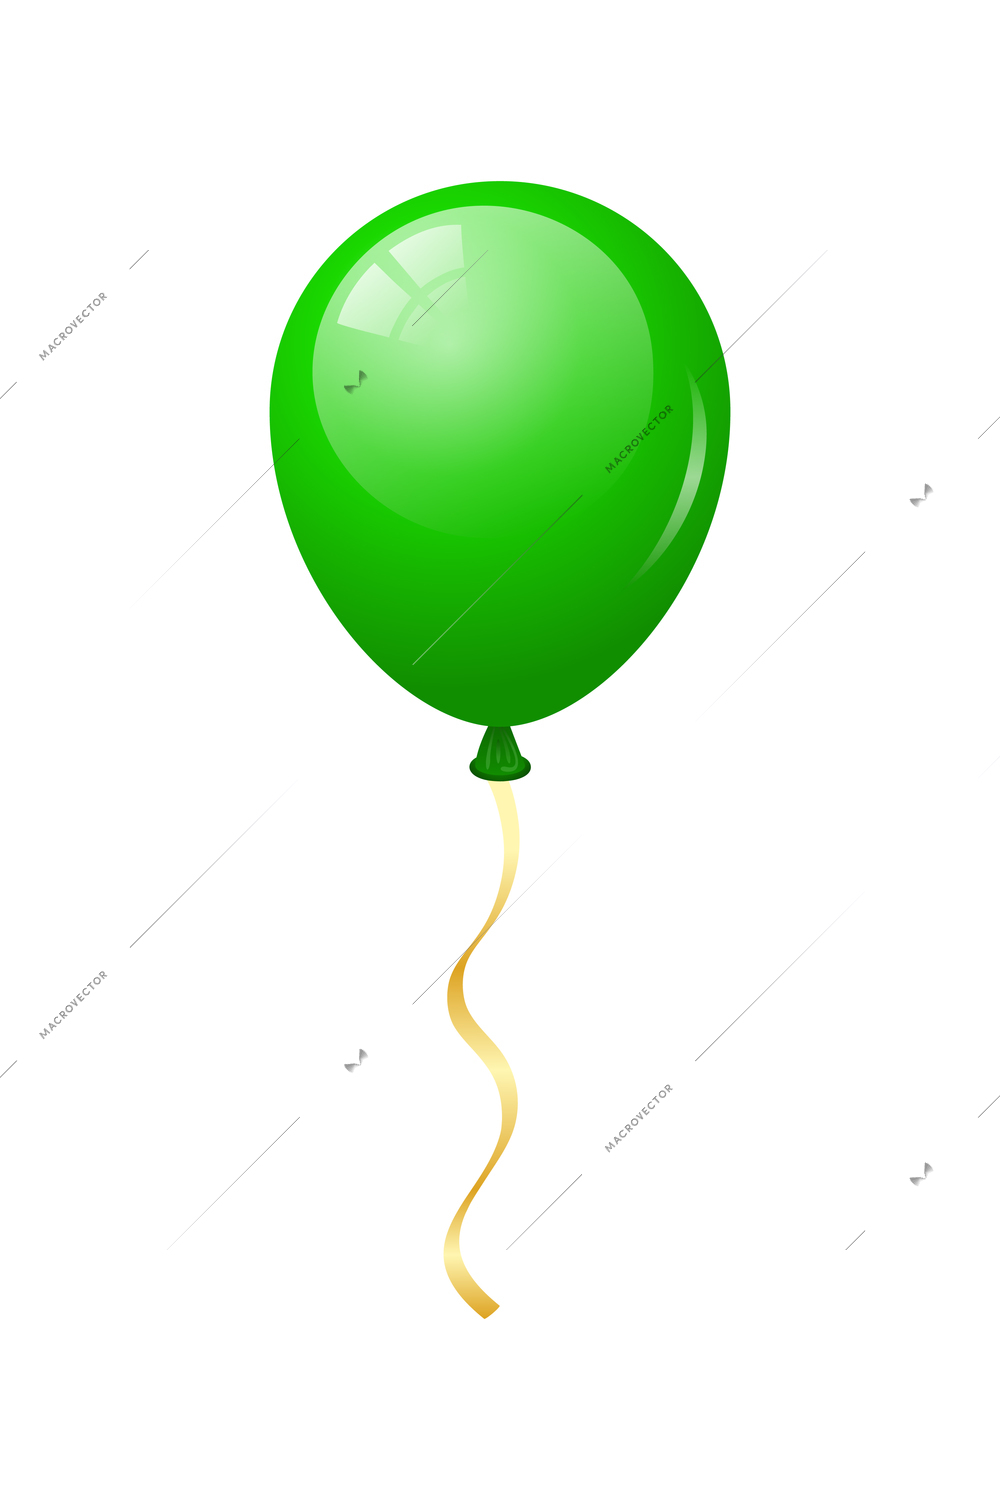 Realistic glossy green balloon with ribbon vector illustration